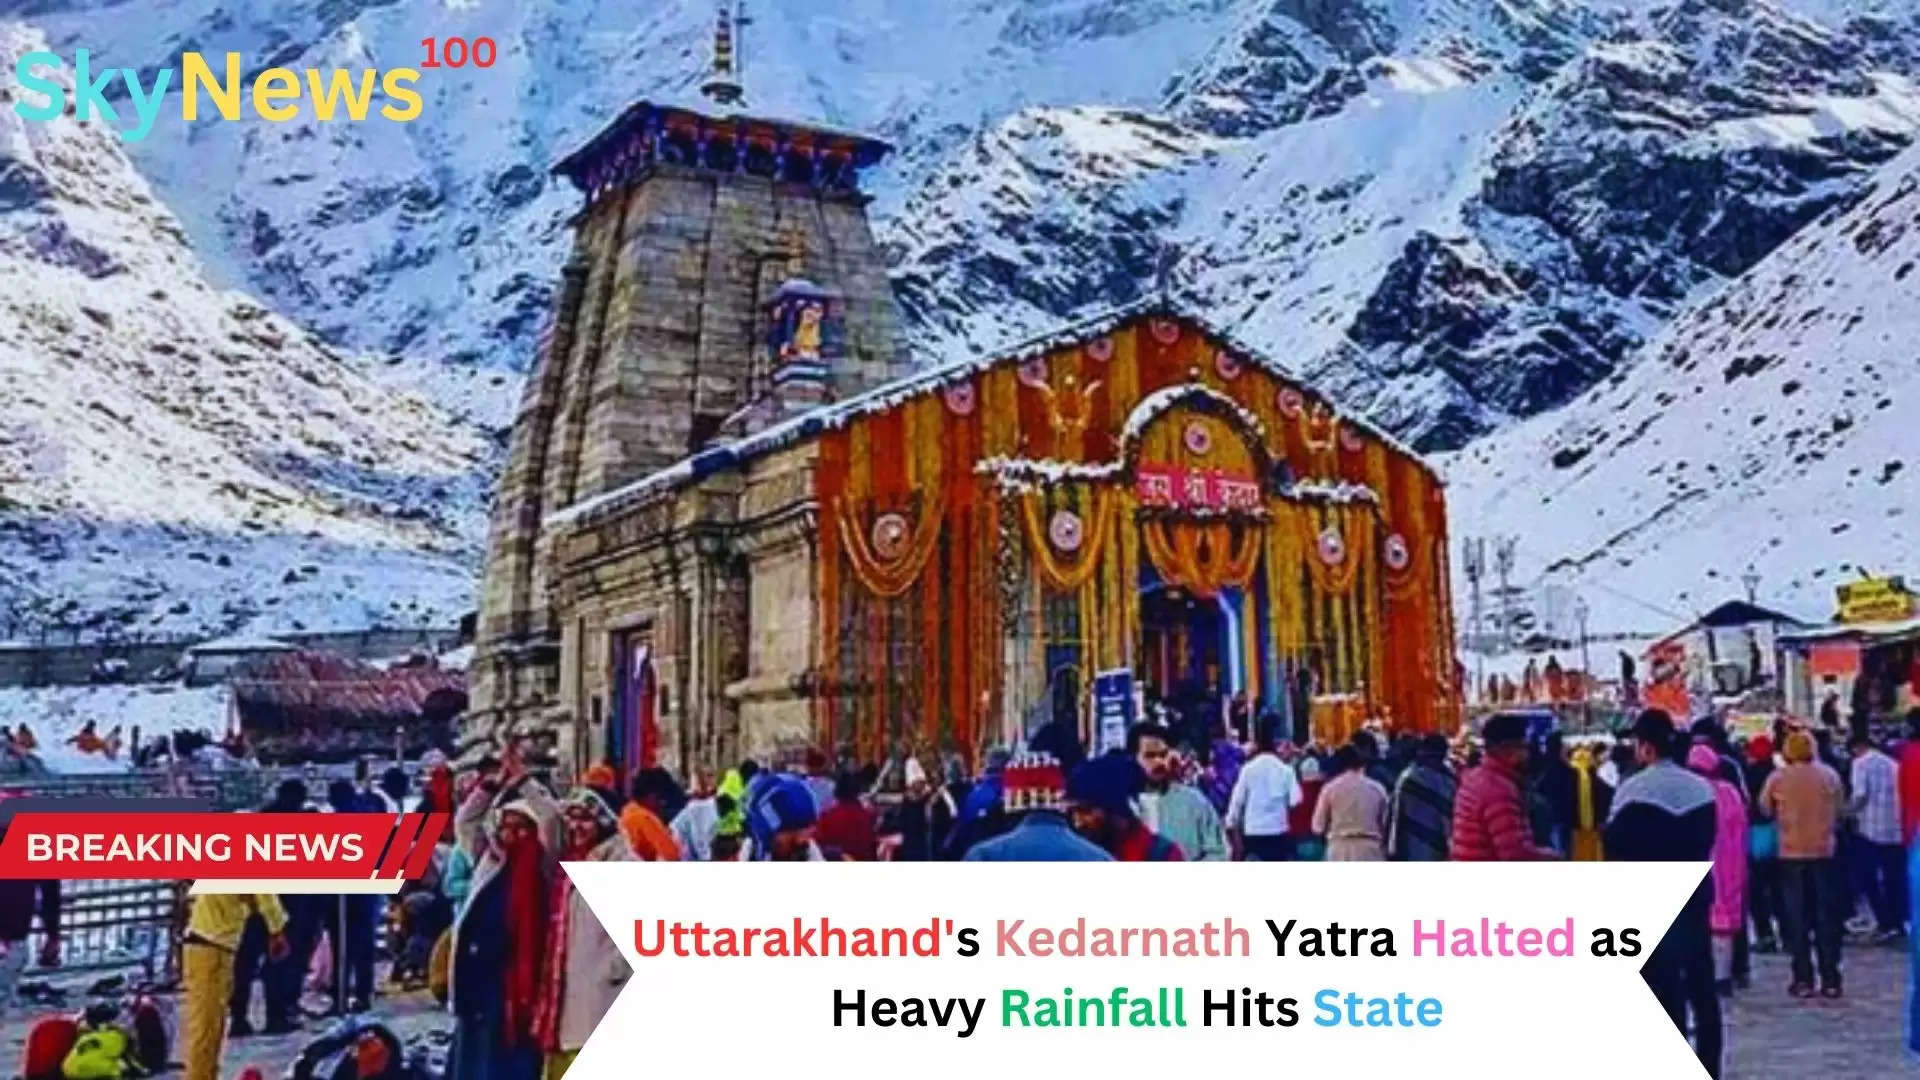 Uttarakhand's Kedarnath Yatra Halted as Heavy Rainfall Hits State